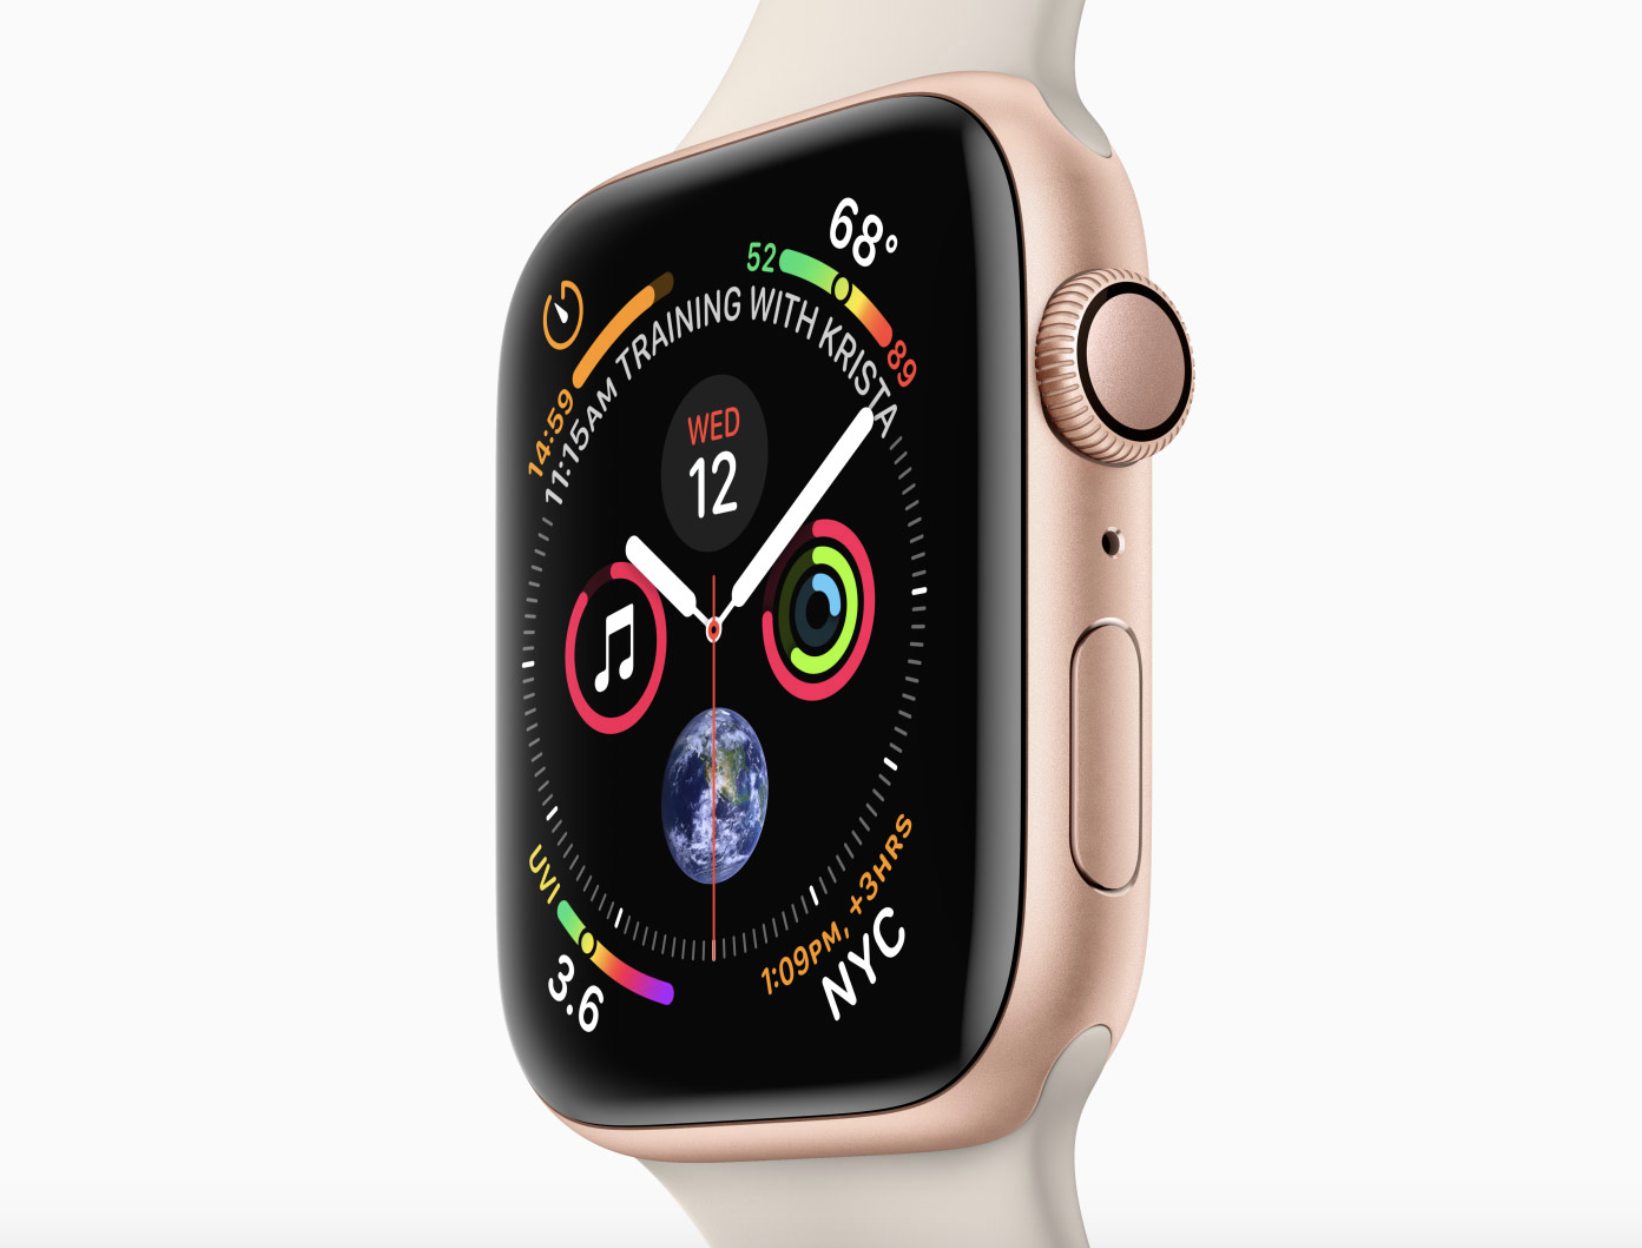 iPhone (Max) en Apple Watch Series 4 uitverkocht? Hier is nog voorraad